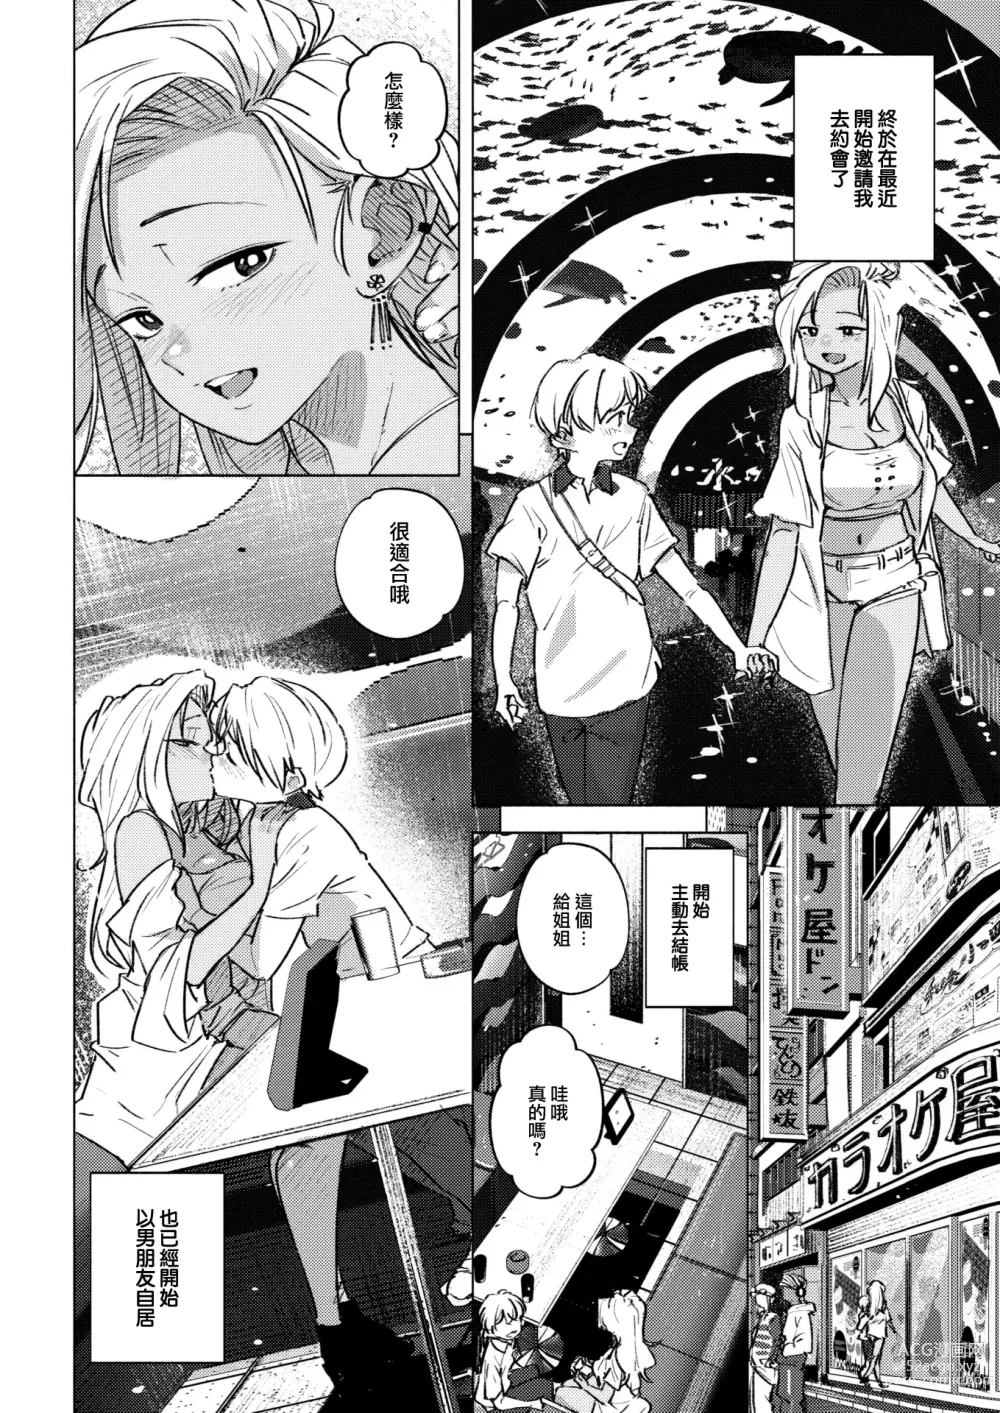 Page 15 of manga Ii Wake - reasons for orgasm